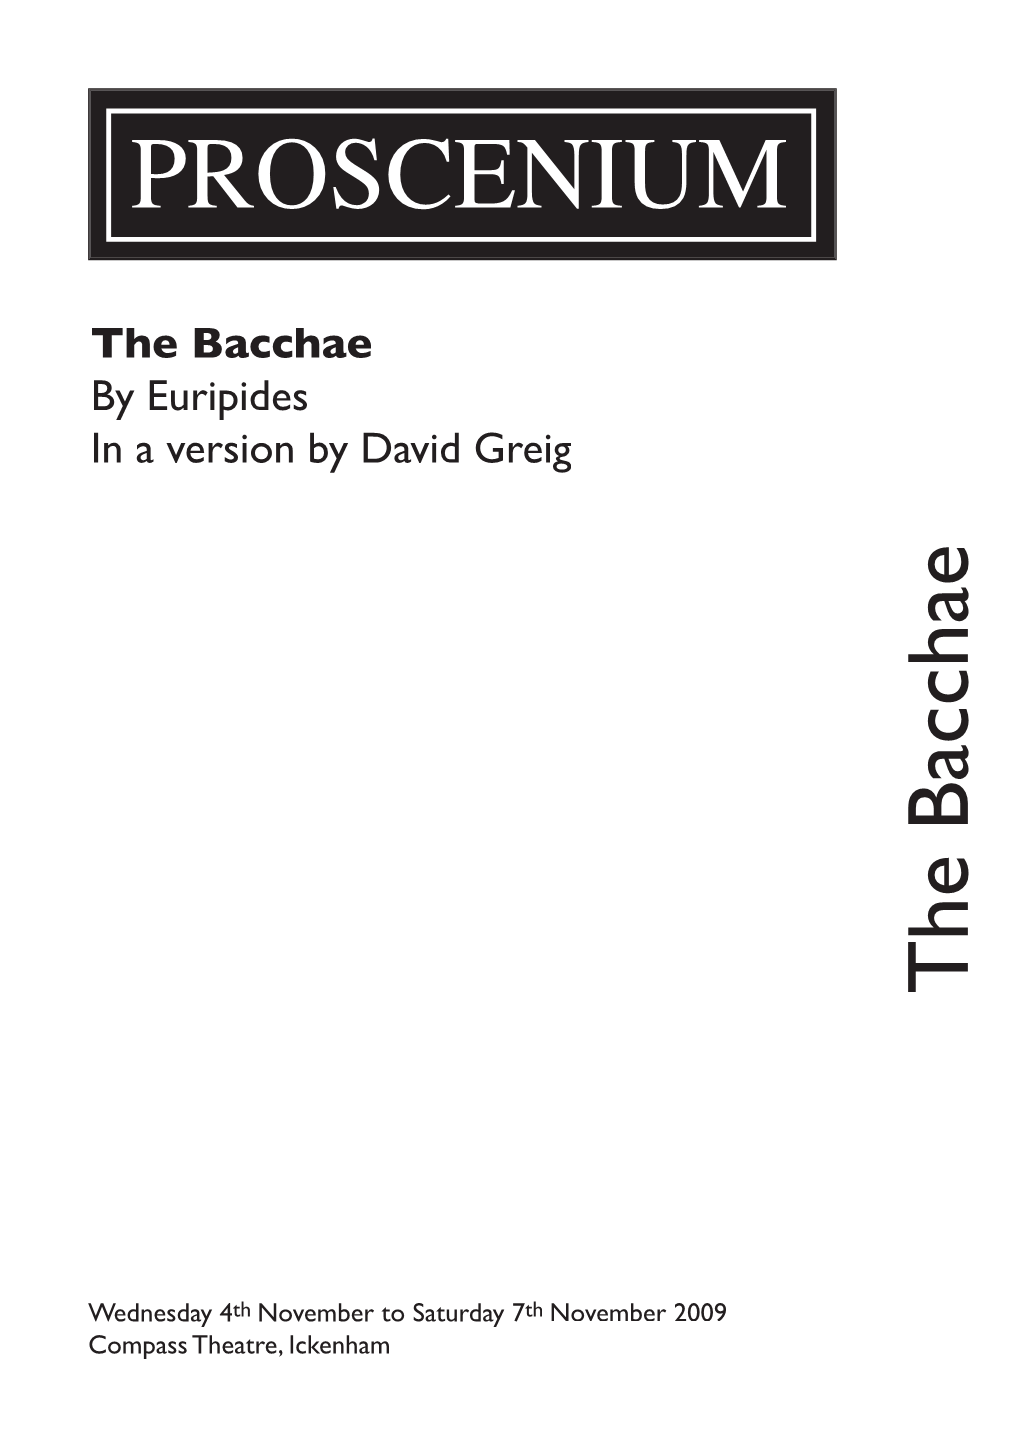 The Bacchae PROSCENIUM Th November Tosaturday 7 Th November 2009